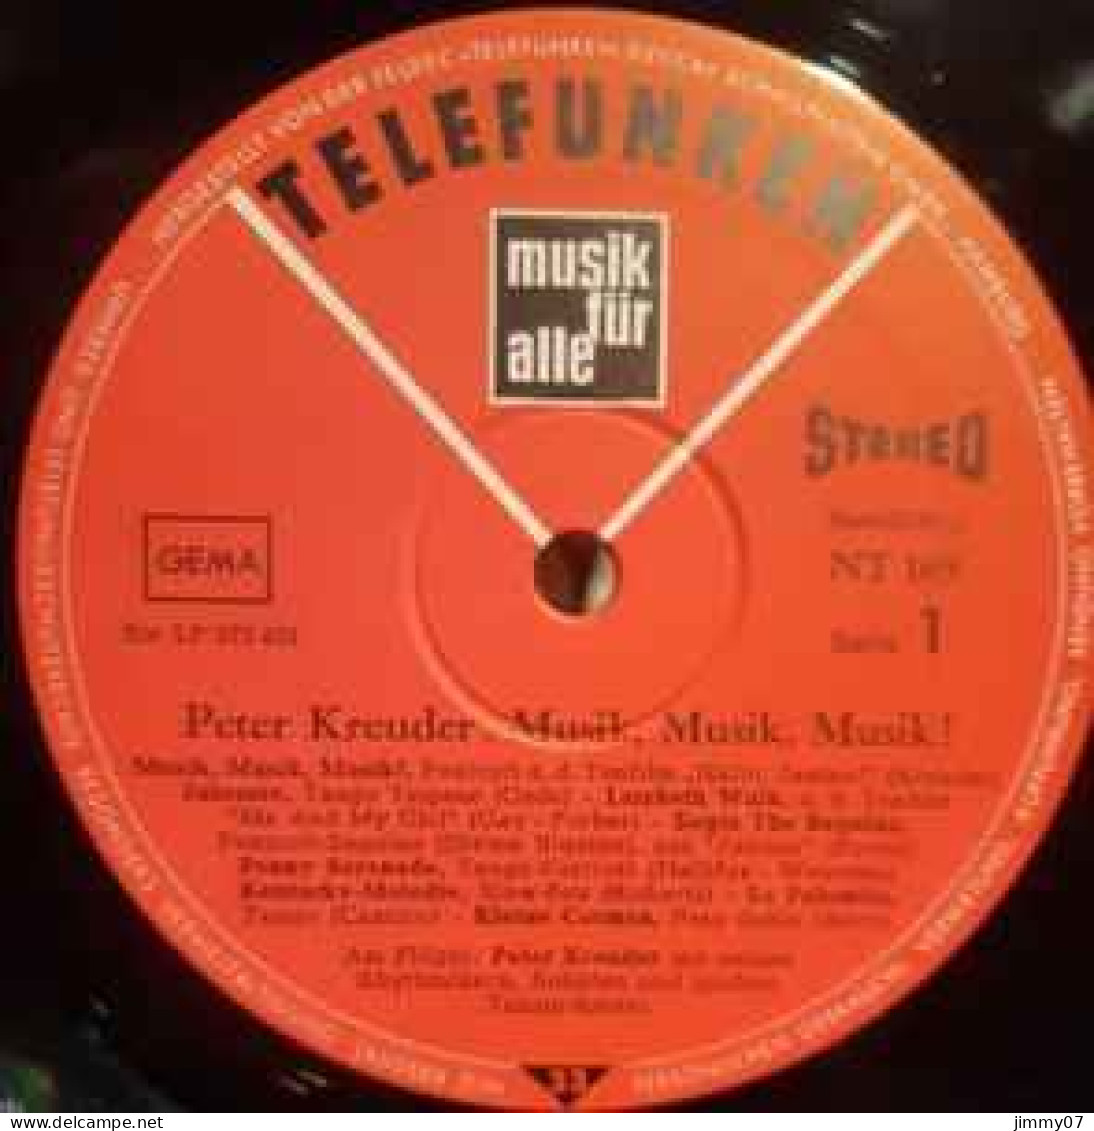 Peter Kreuder - Musik! Musik! Musik! (LP, Album) - Classique